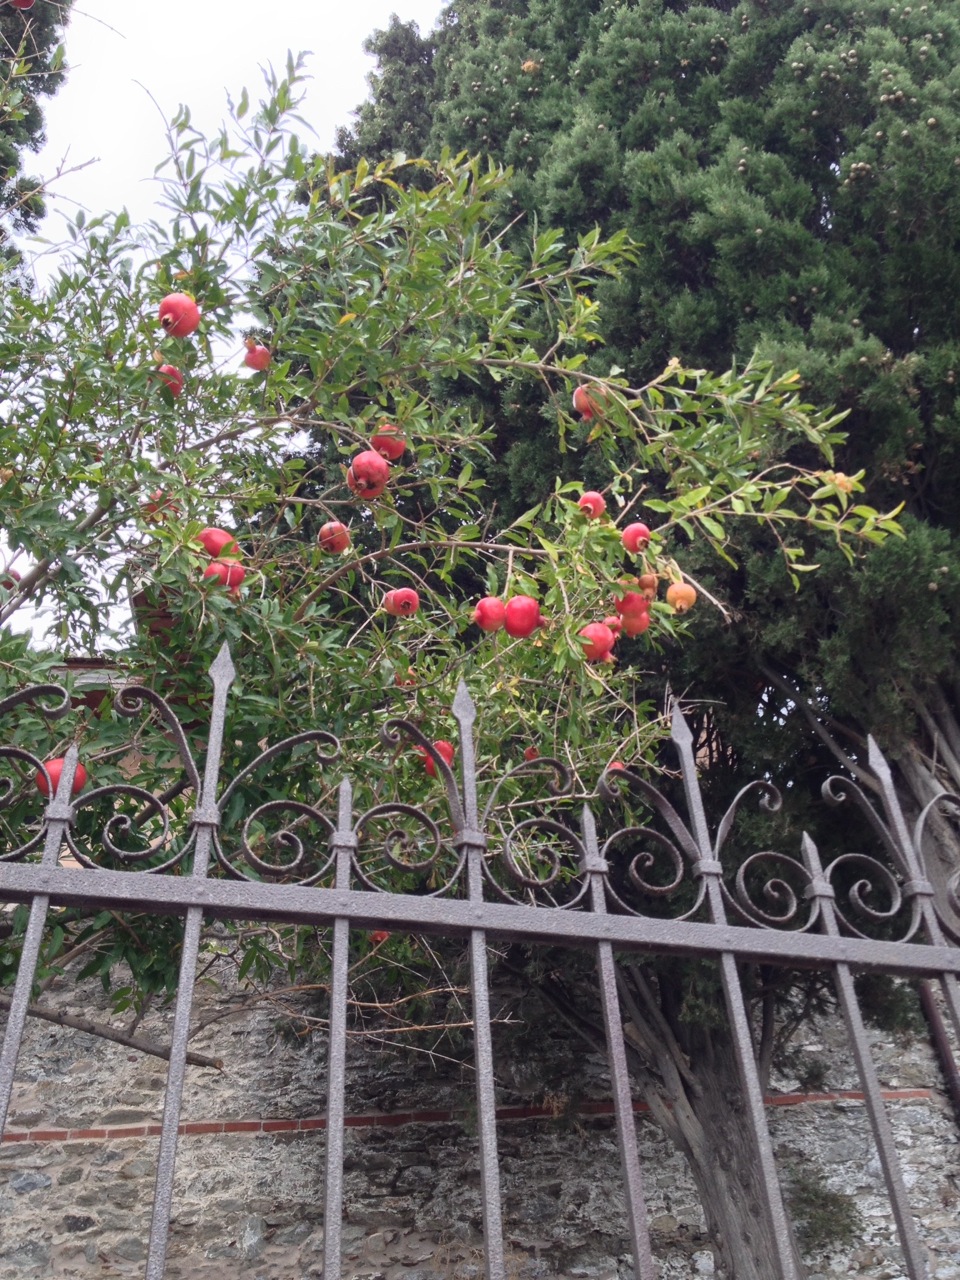 Festive pomegranates